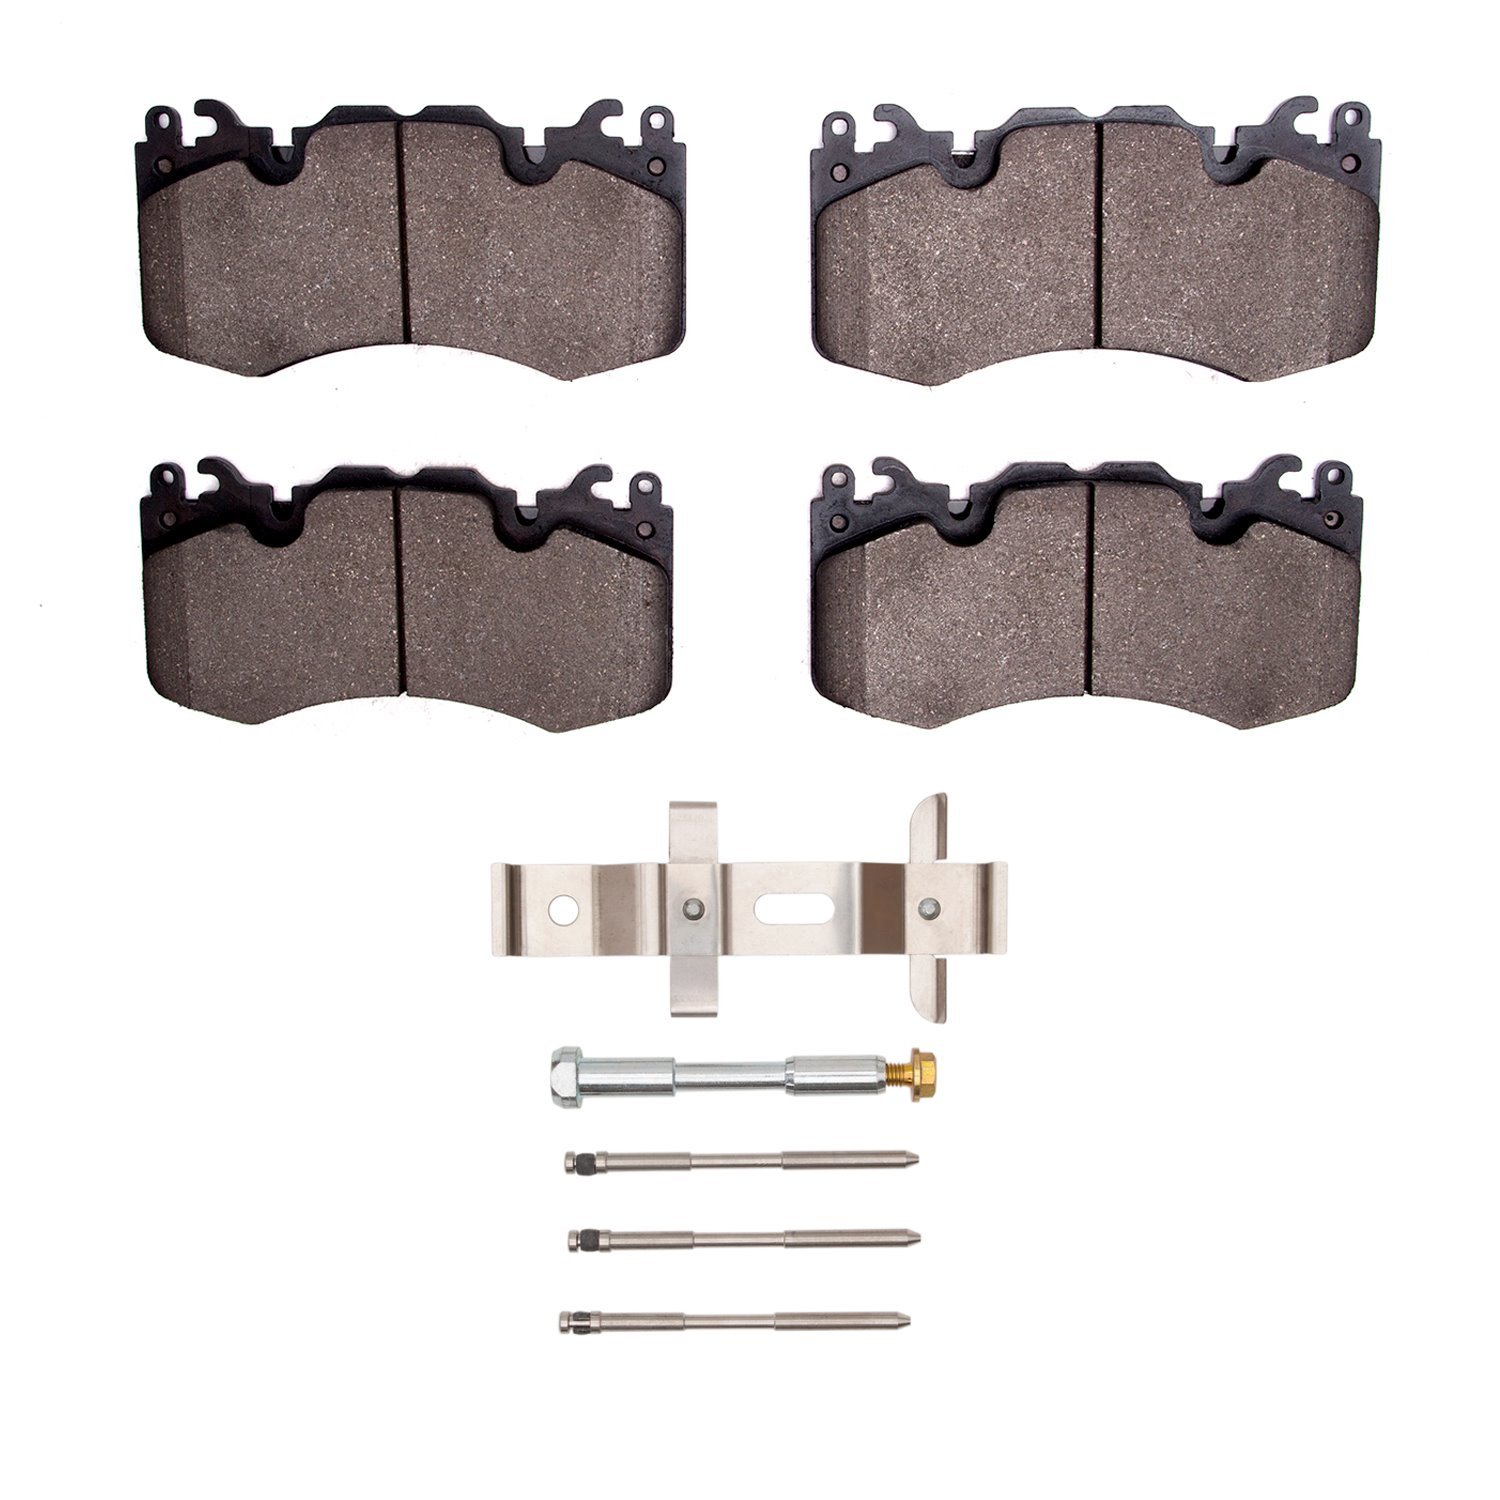 1600-1426-01 5000 Euro Ceramic Brake Pads & Hardware Kit, Fits Select Land Rover, Position: Front